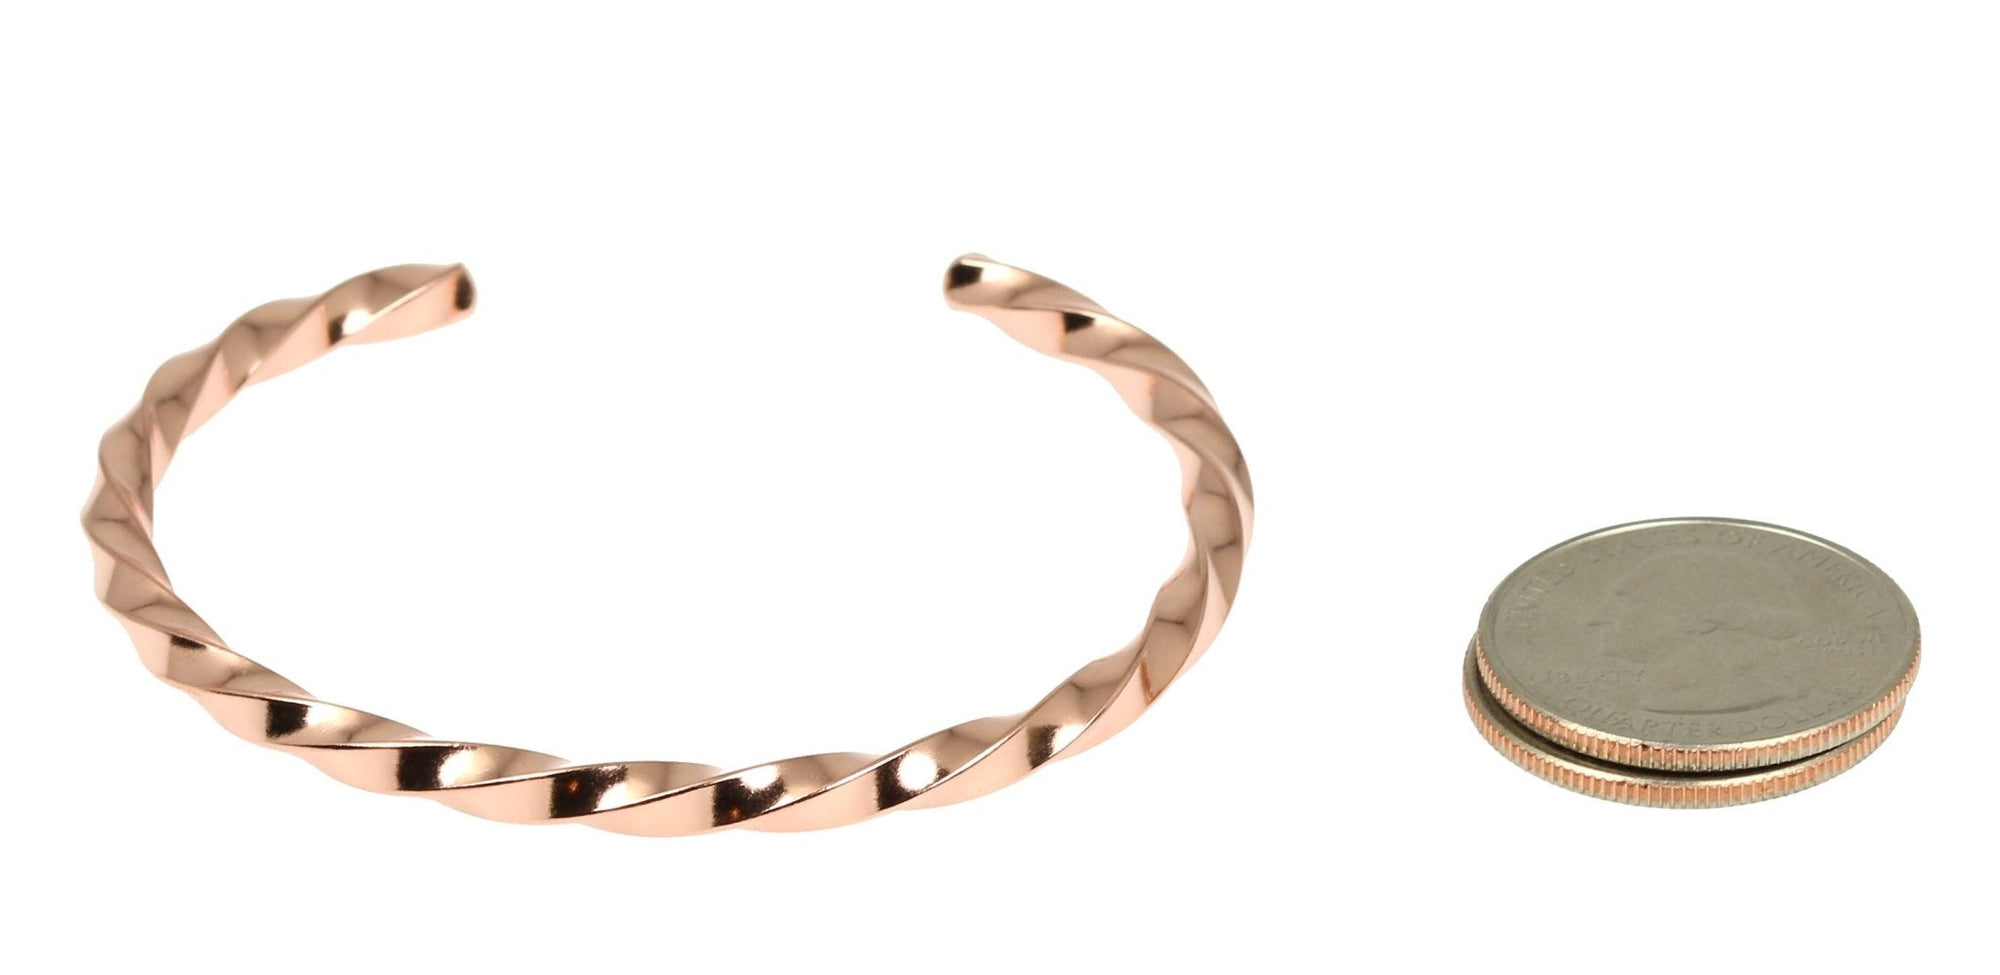 Width of Twisted Copper Cuff Bracelet